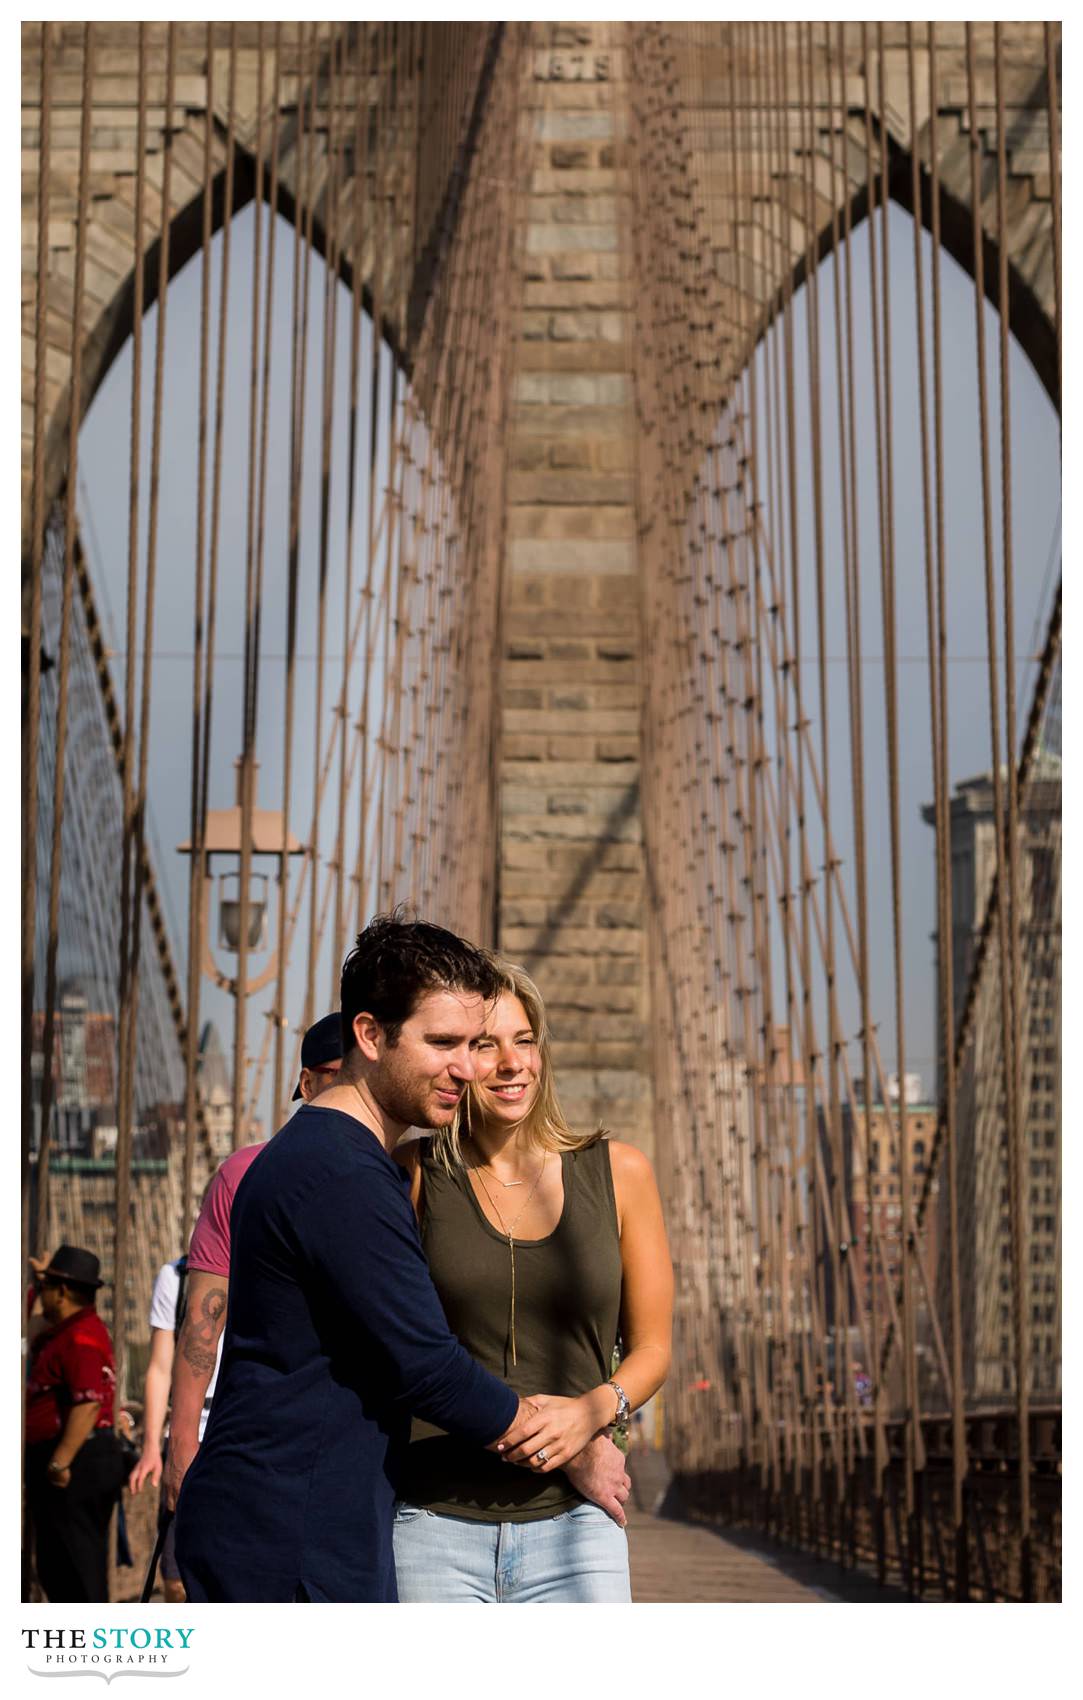 Brooklyn Bridge engagement photo